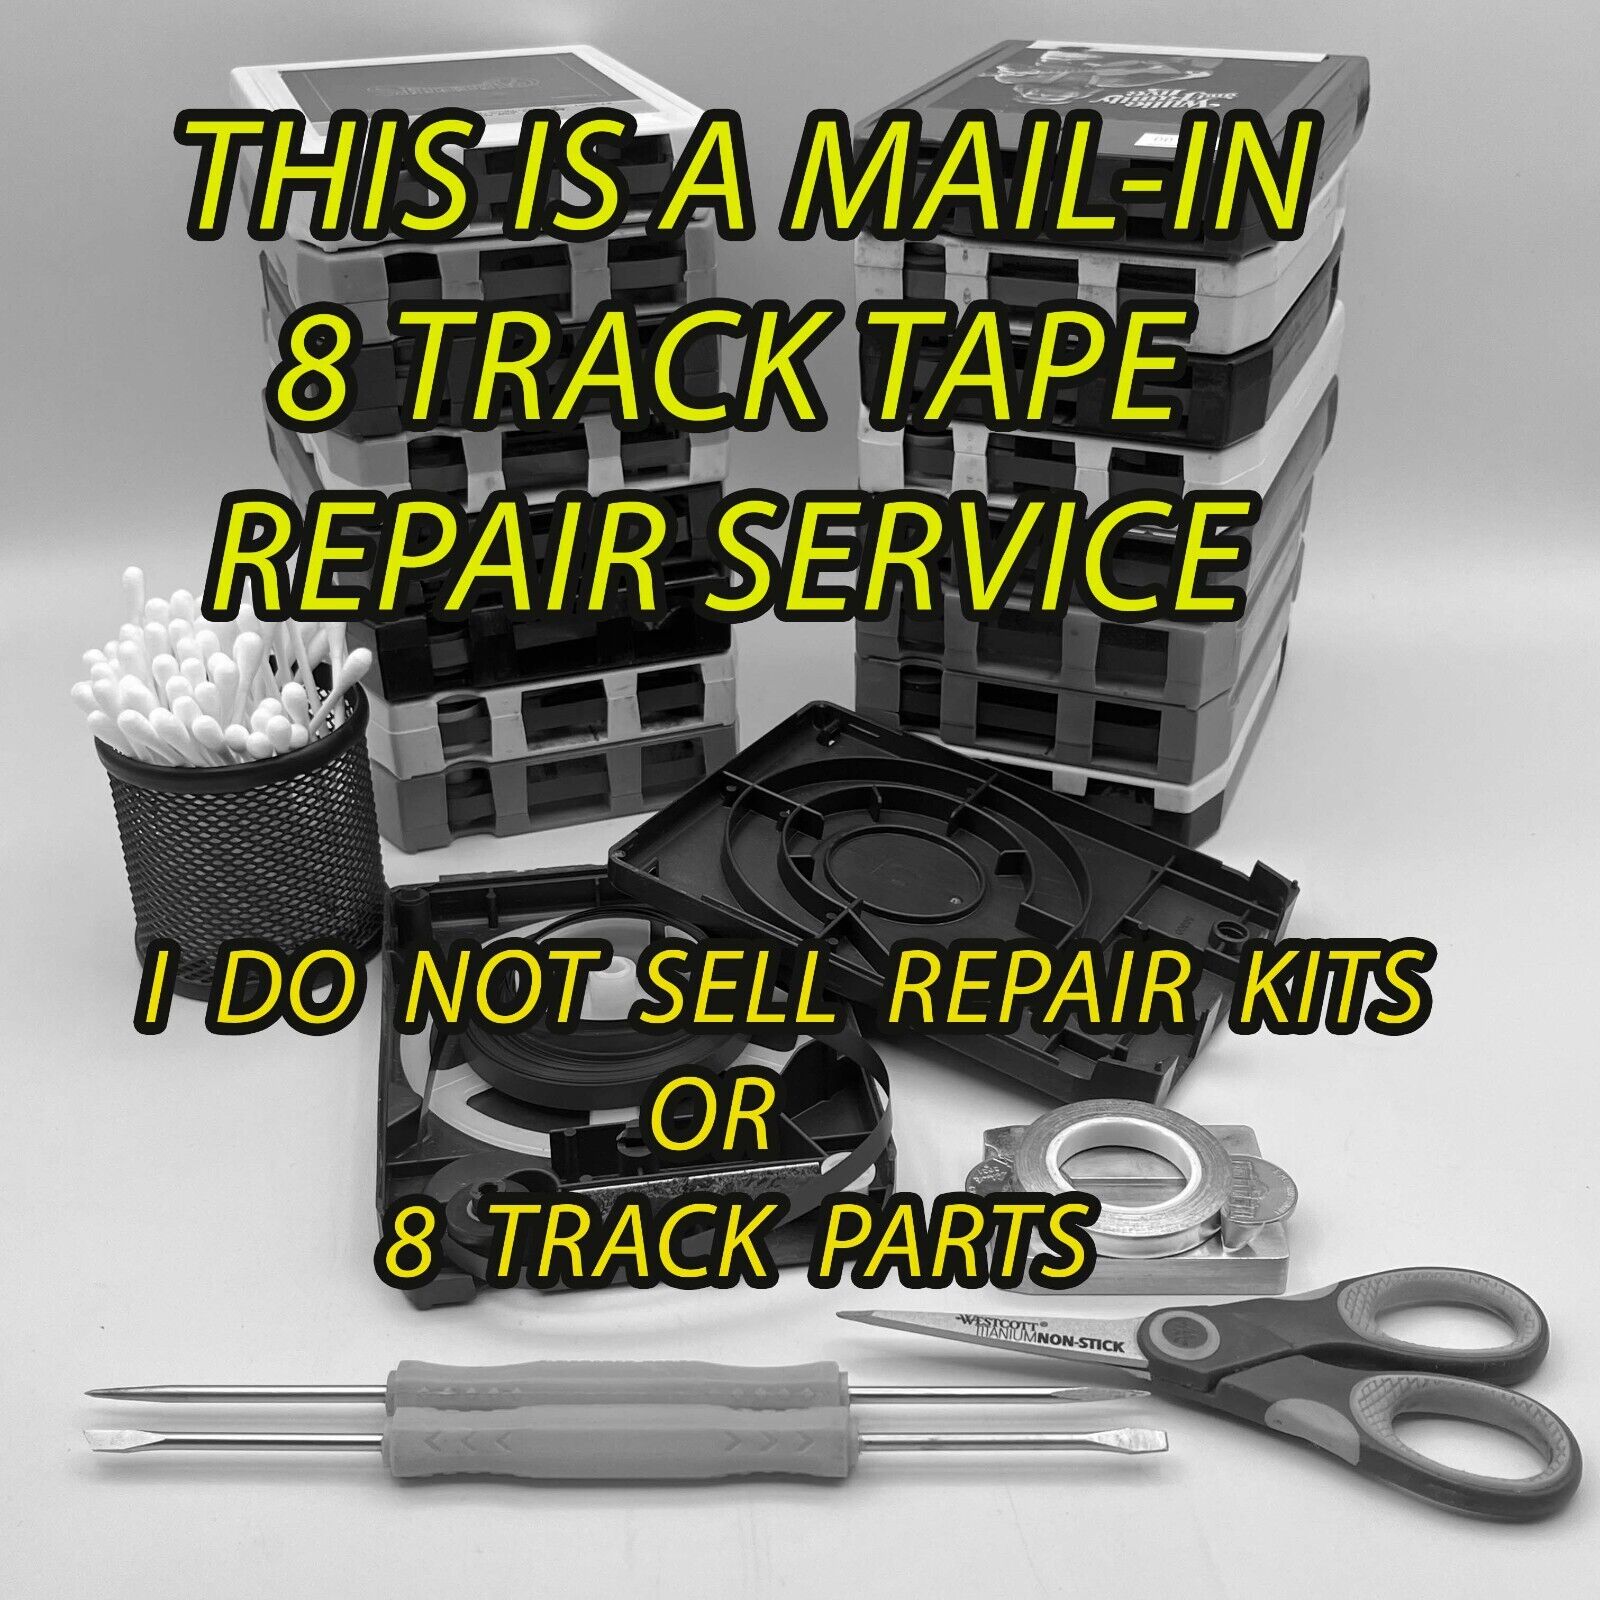 Mail-In 8 Track Tape Repair Service - Full Interior Restoration - New Splice Pad